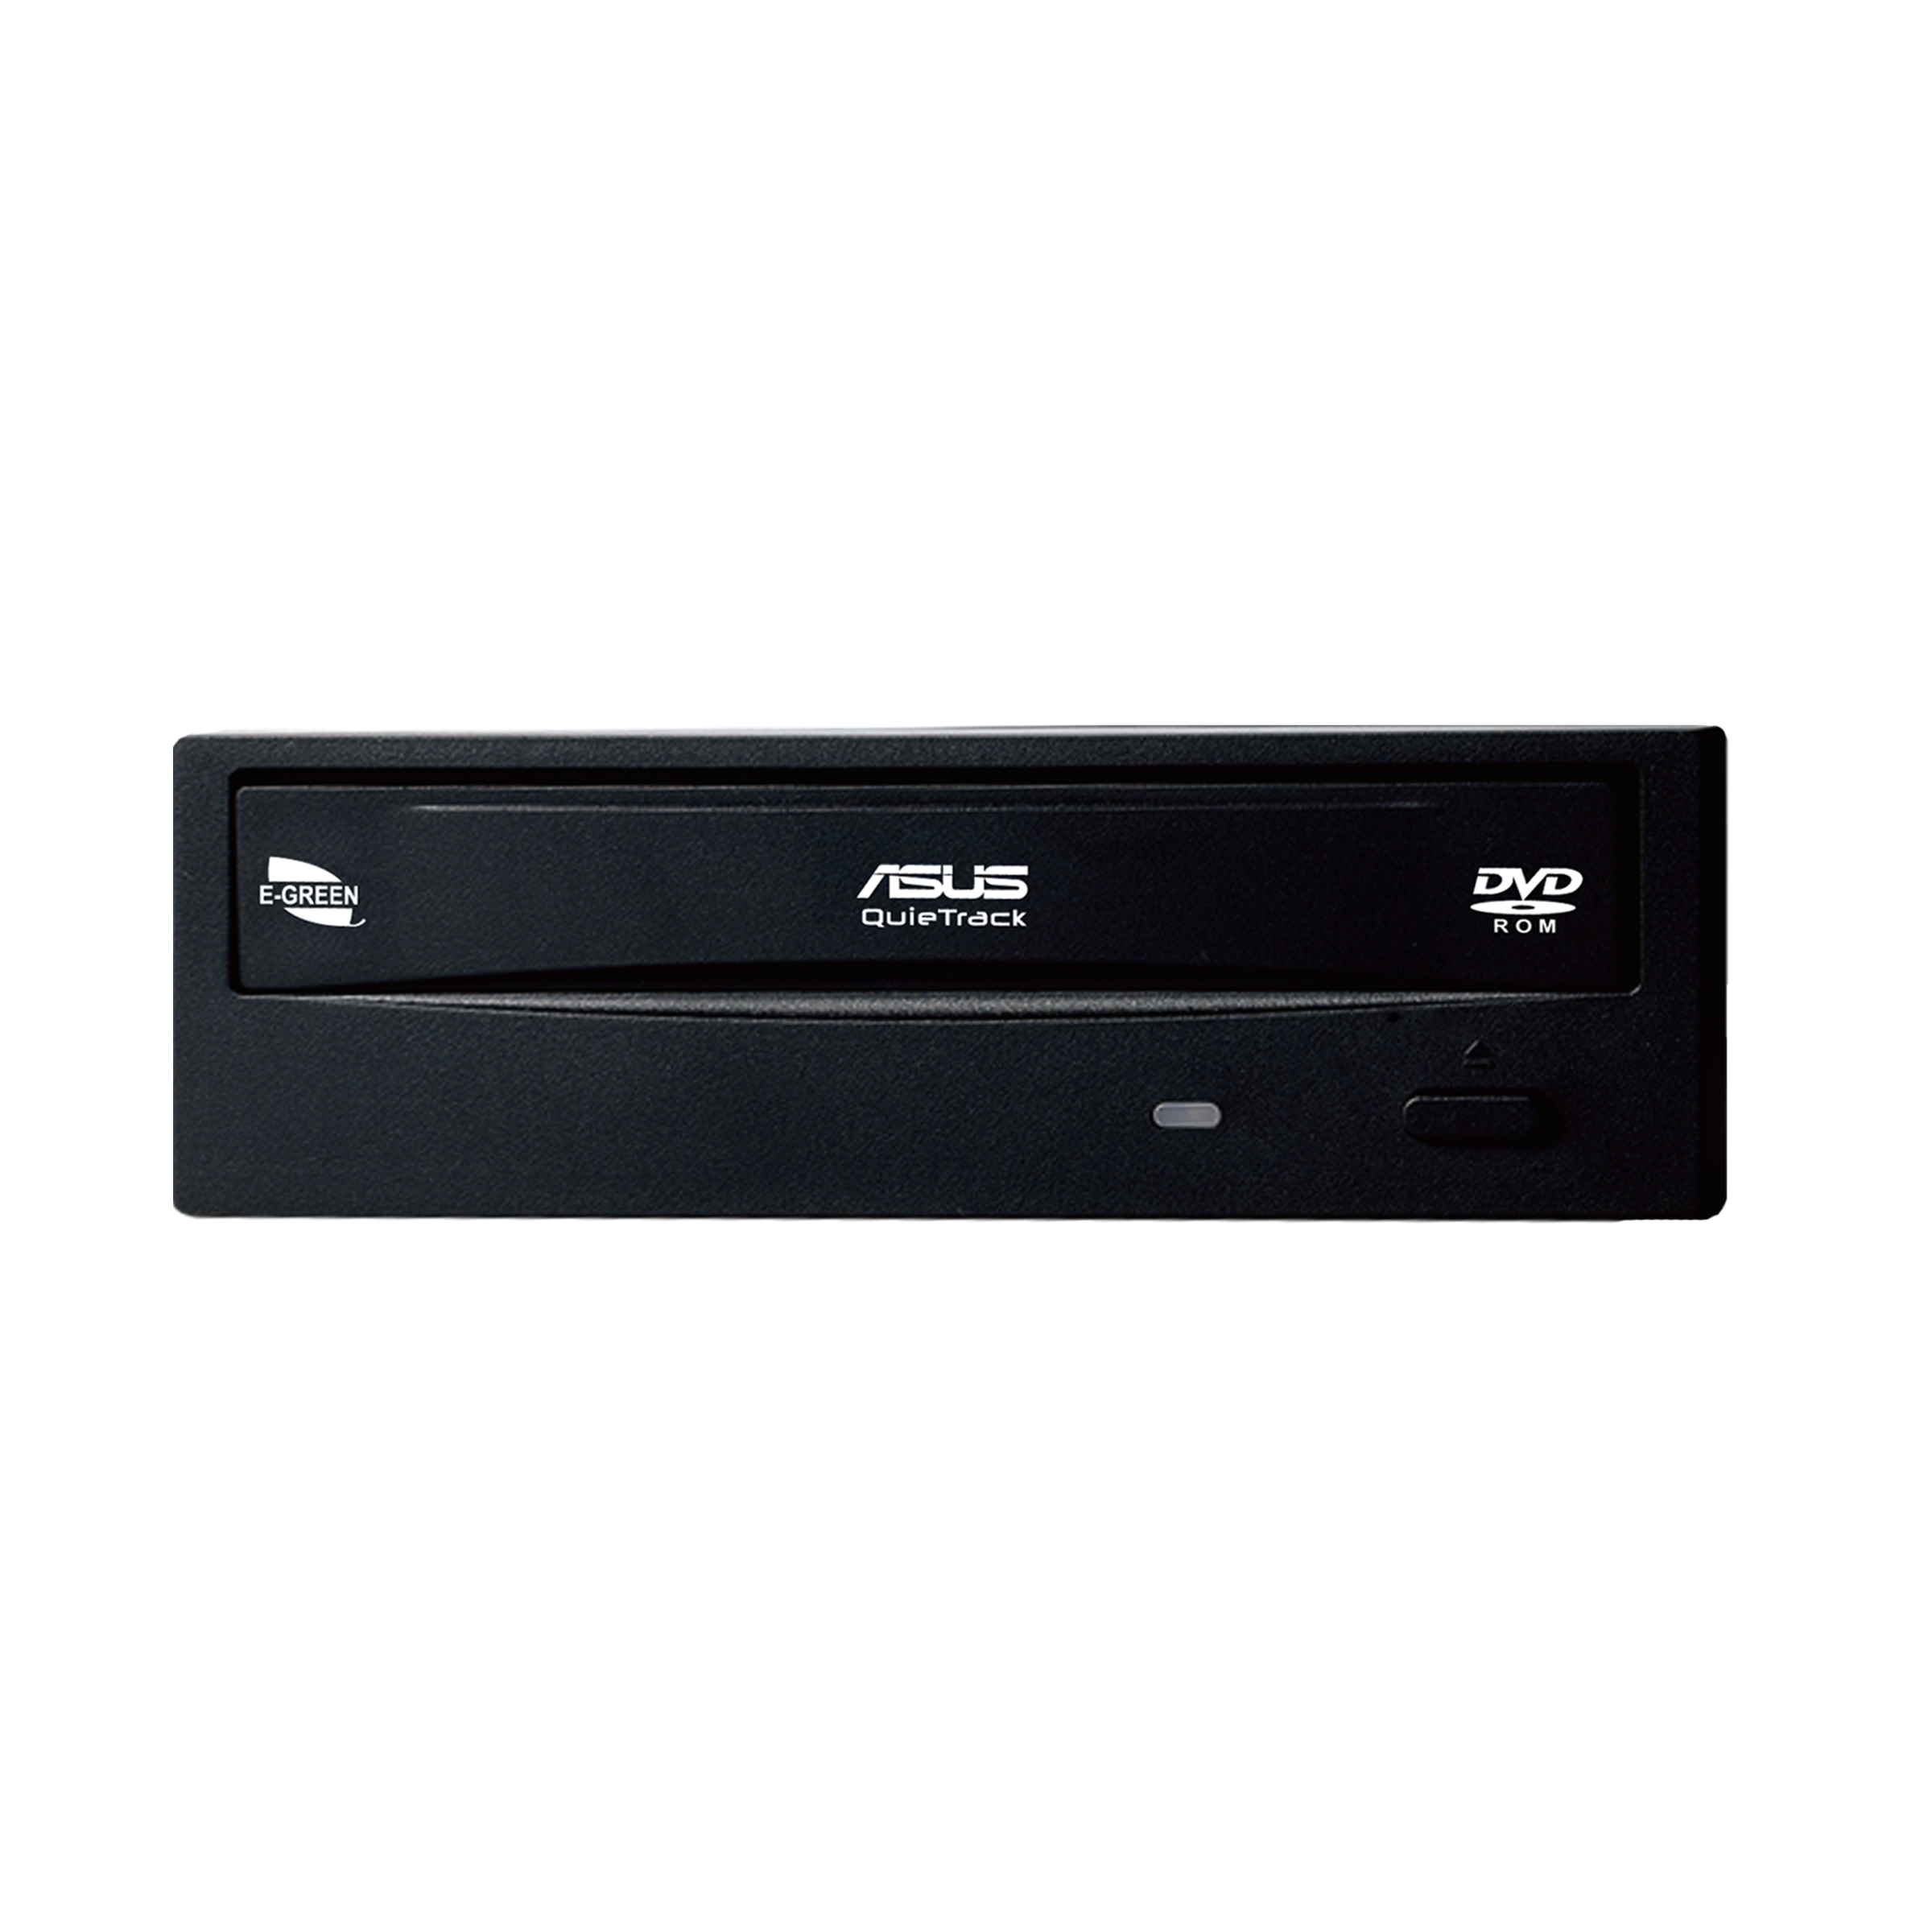 Dvd E818a9t Optical Drives Asus Global